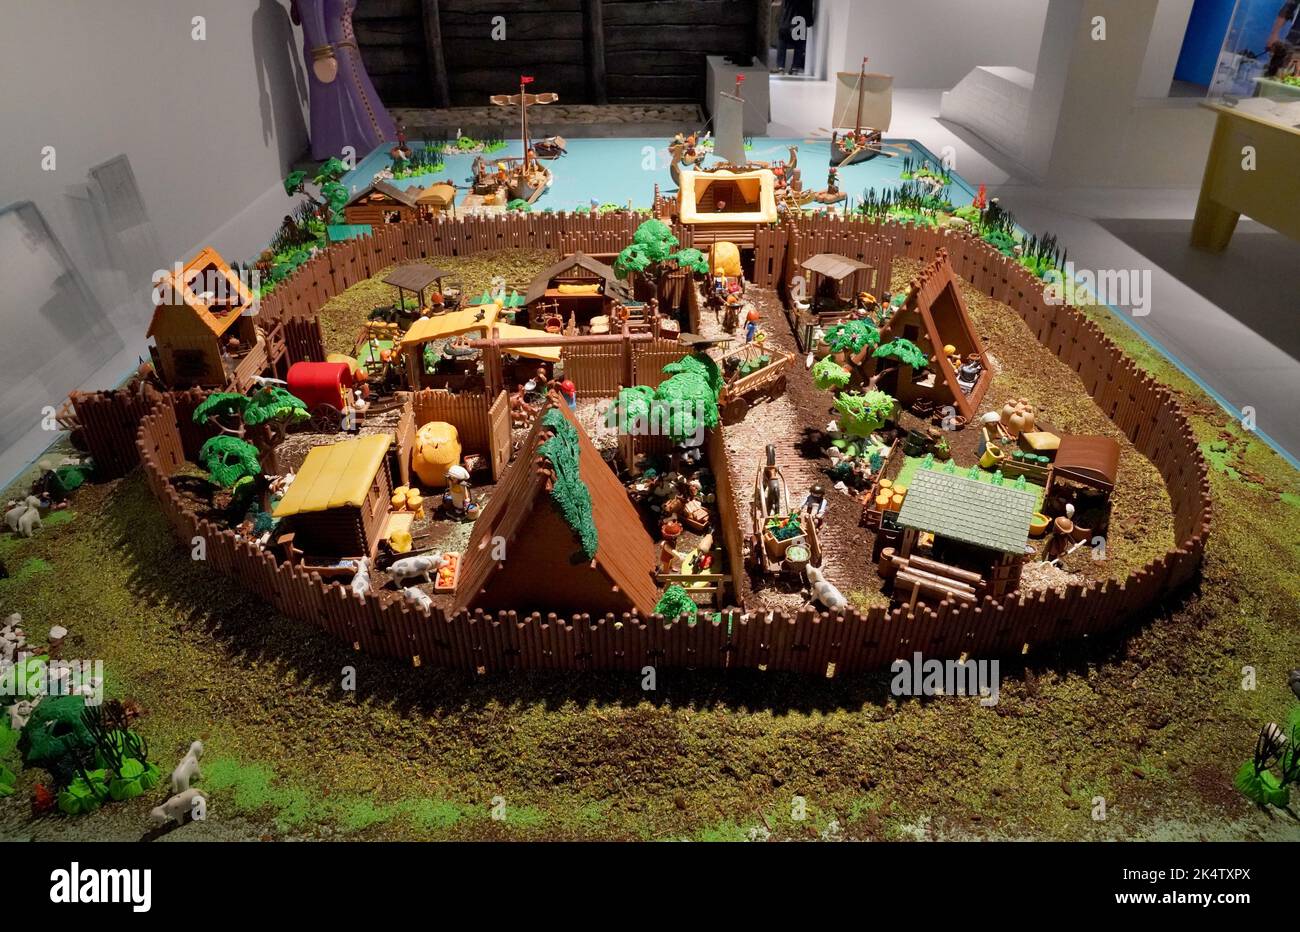 Playmobil castle -Fotos und -Bildmaterial in hoher Auflösung – Alamy